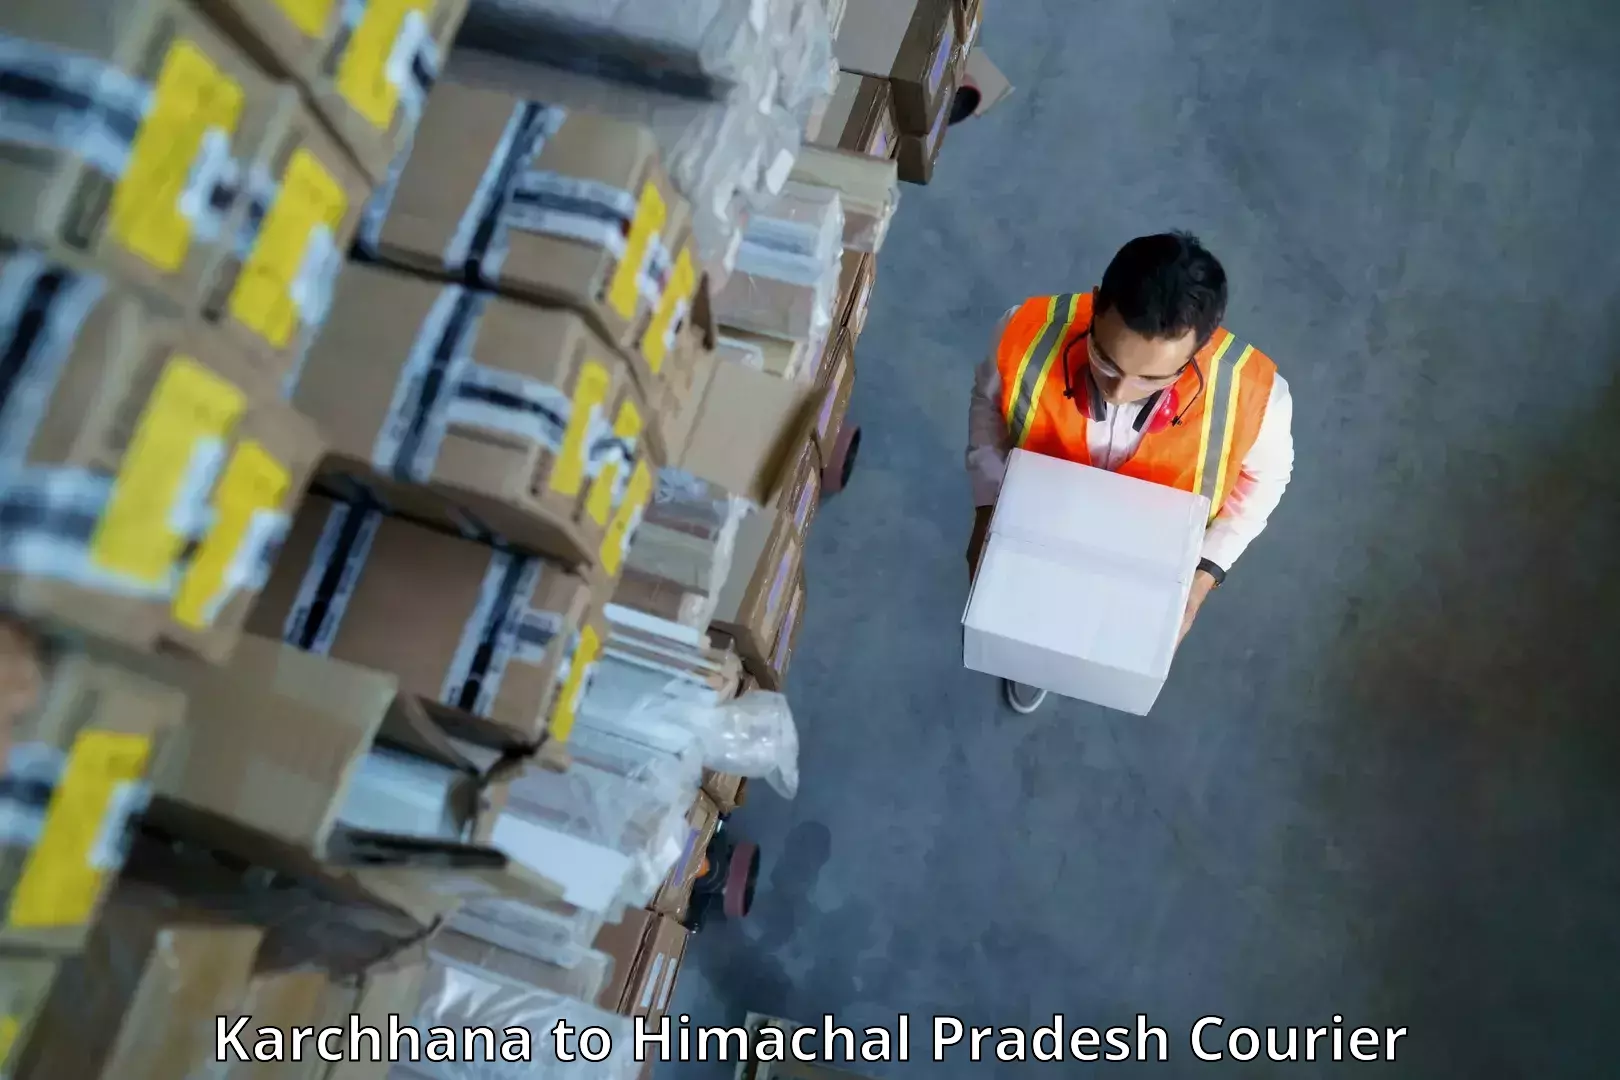 Local delivery service Karchhana to Himachal Pradesh